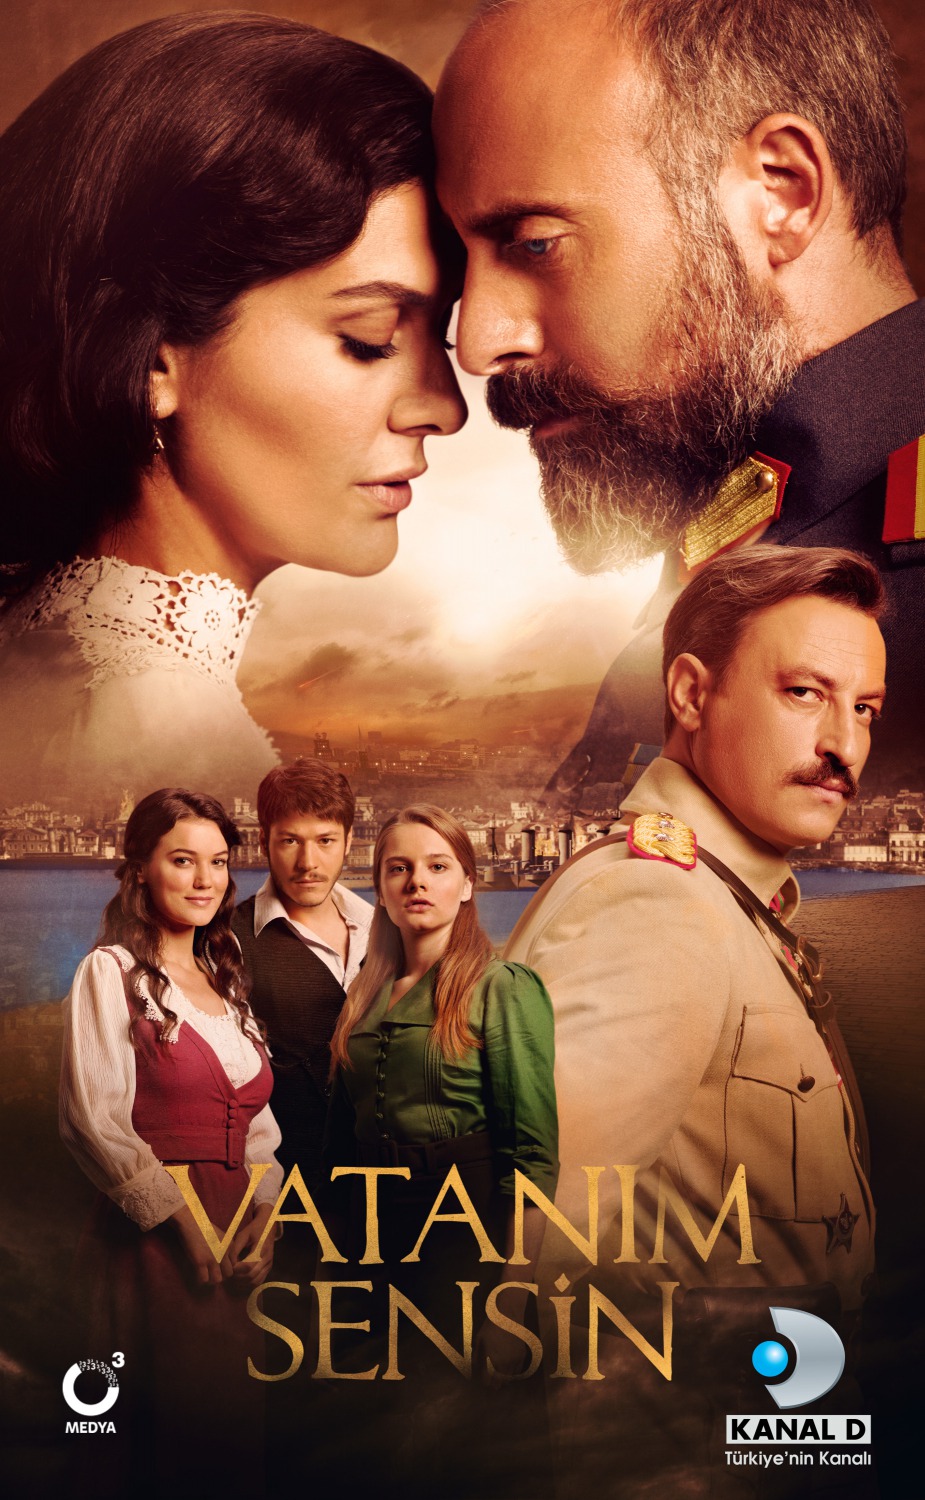 Extra Large TV Poster Image for Vatanim Sensin (#1 of 3)